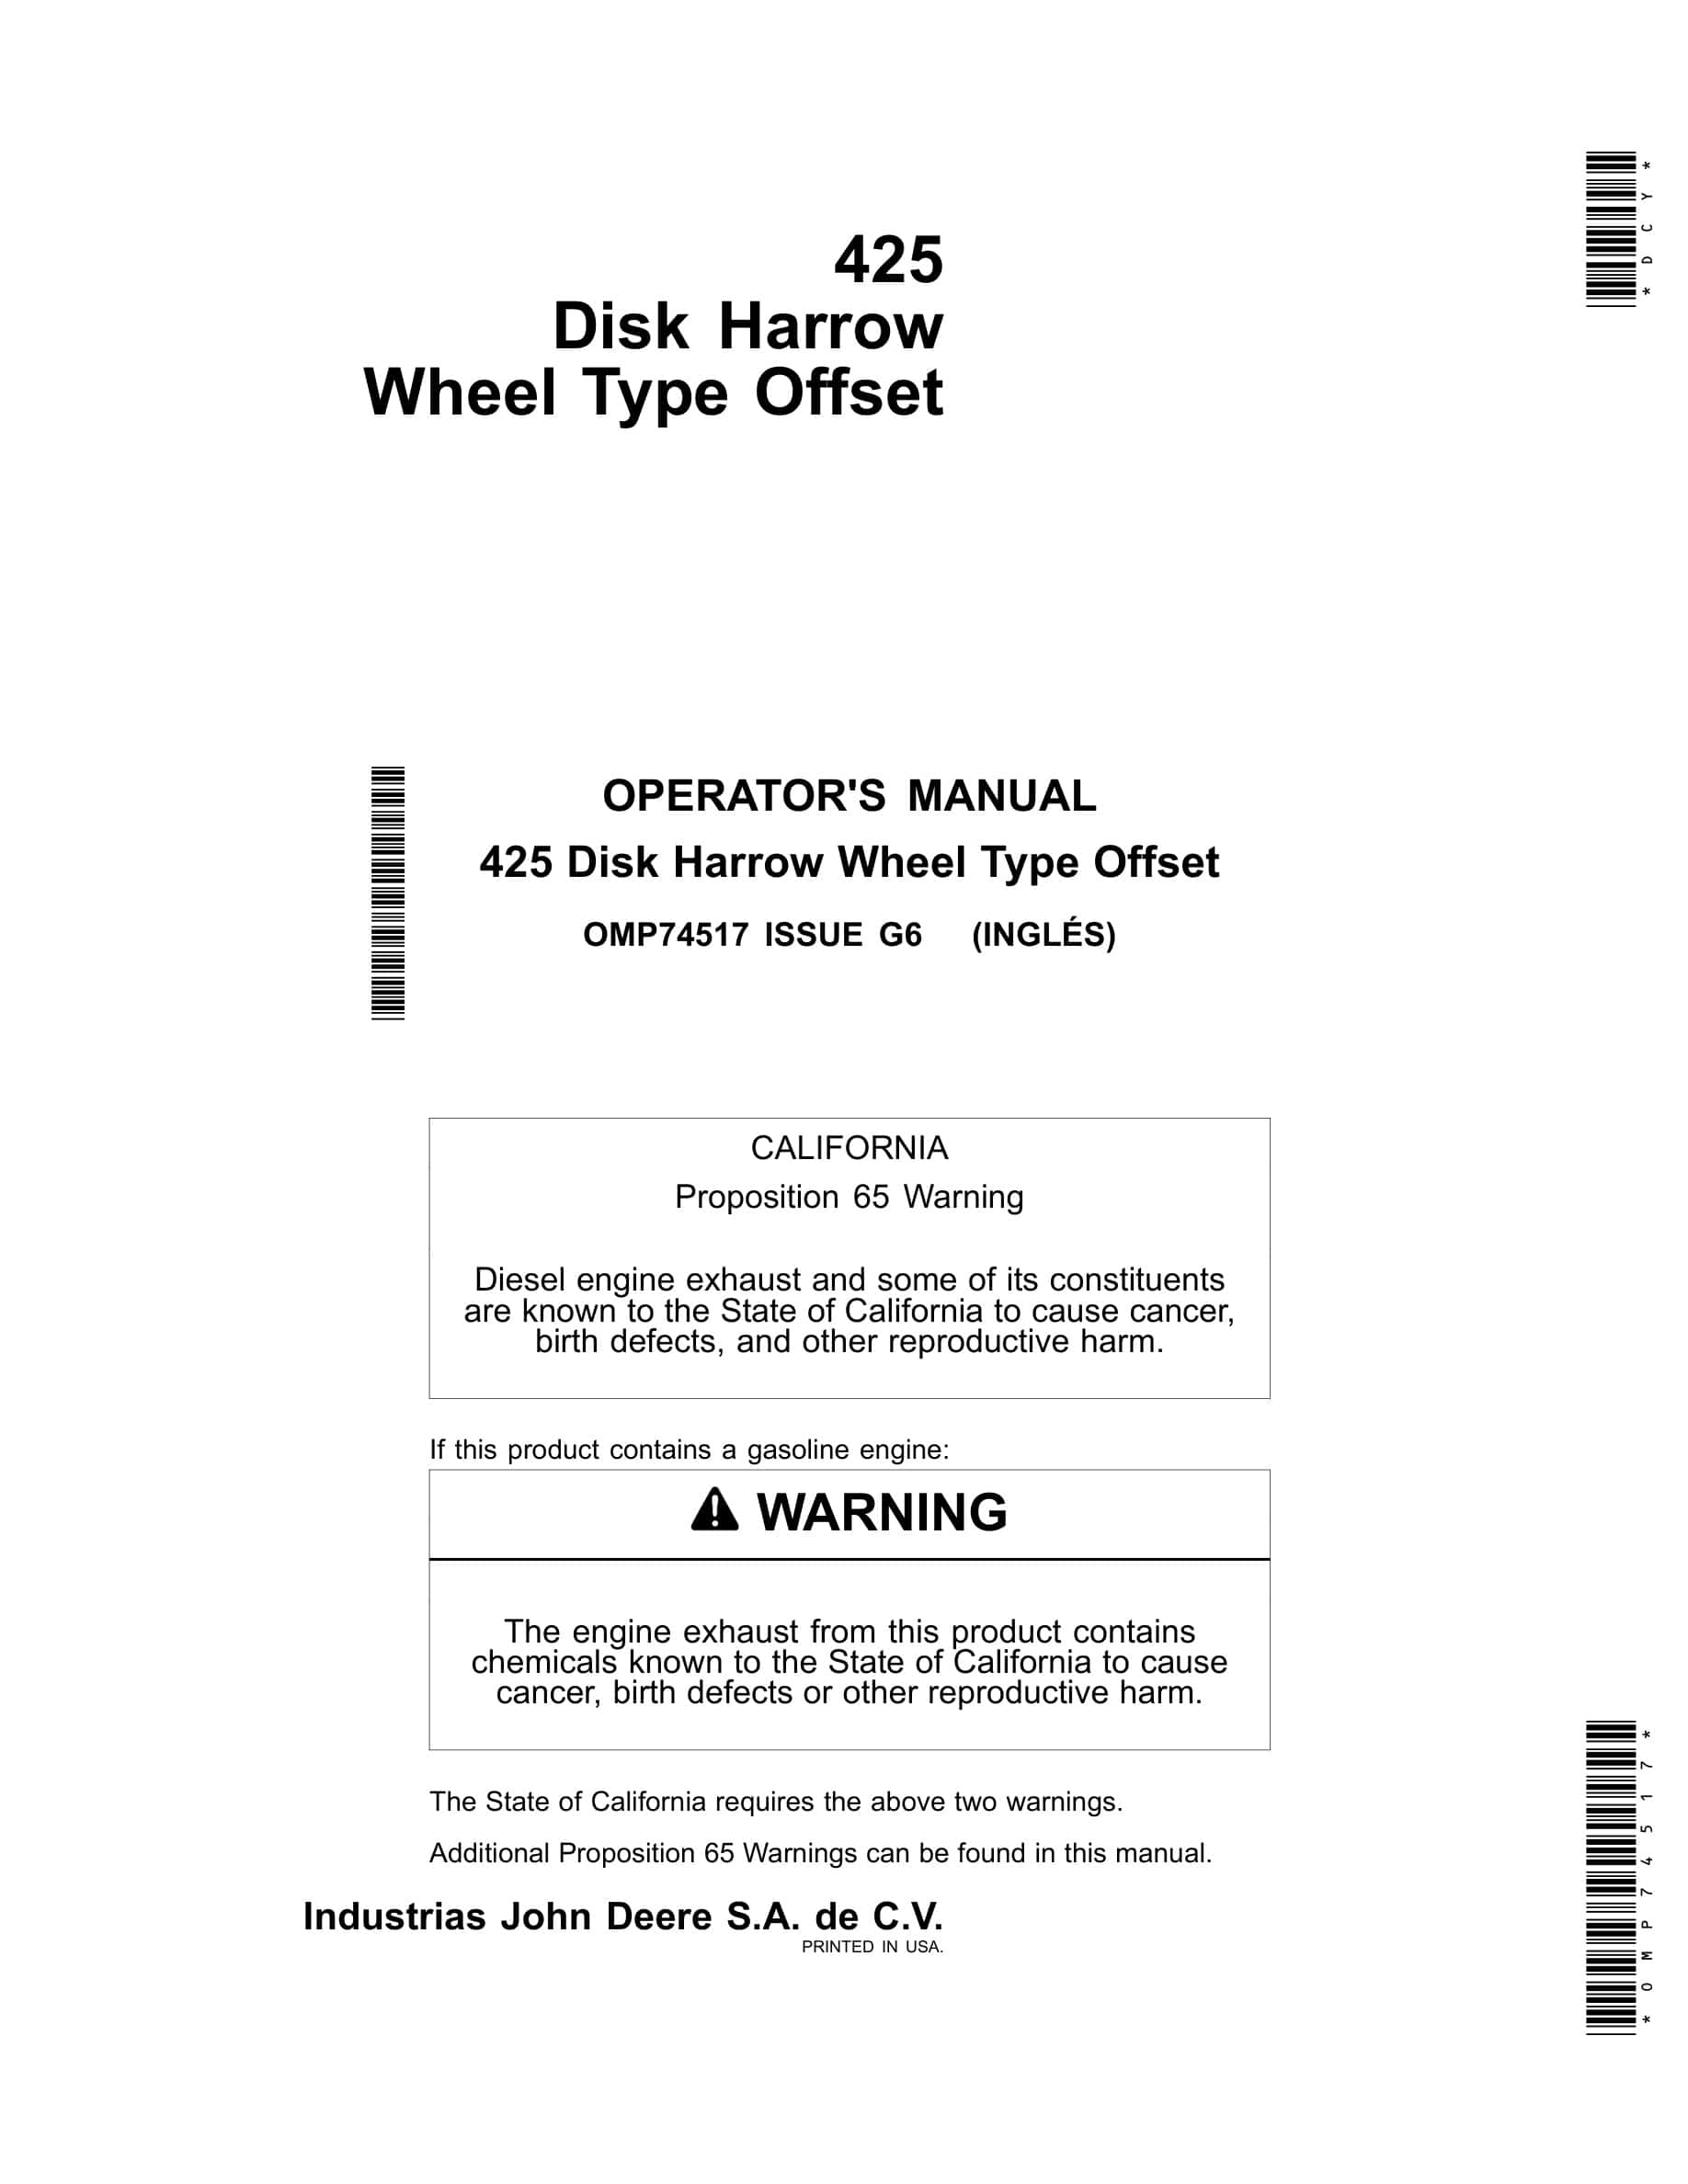 John Deere 425 Disk Harrow Wheel Type Offset Operator Manual OMP74517-1